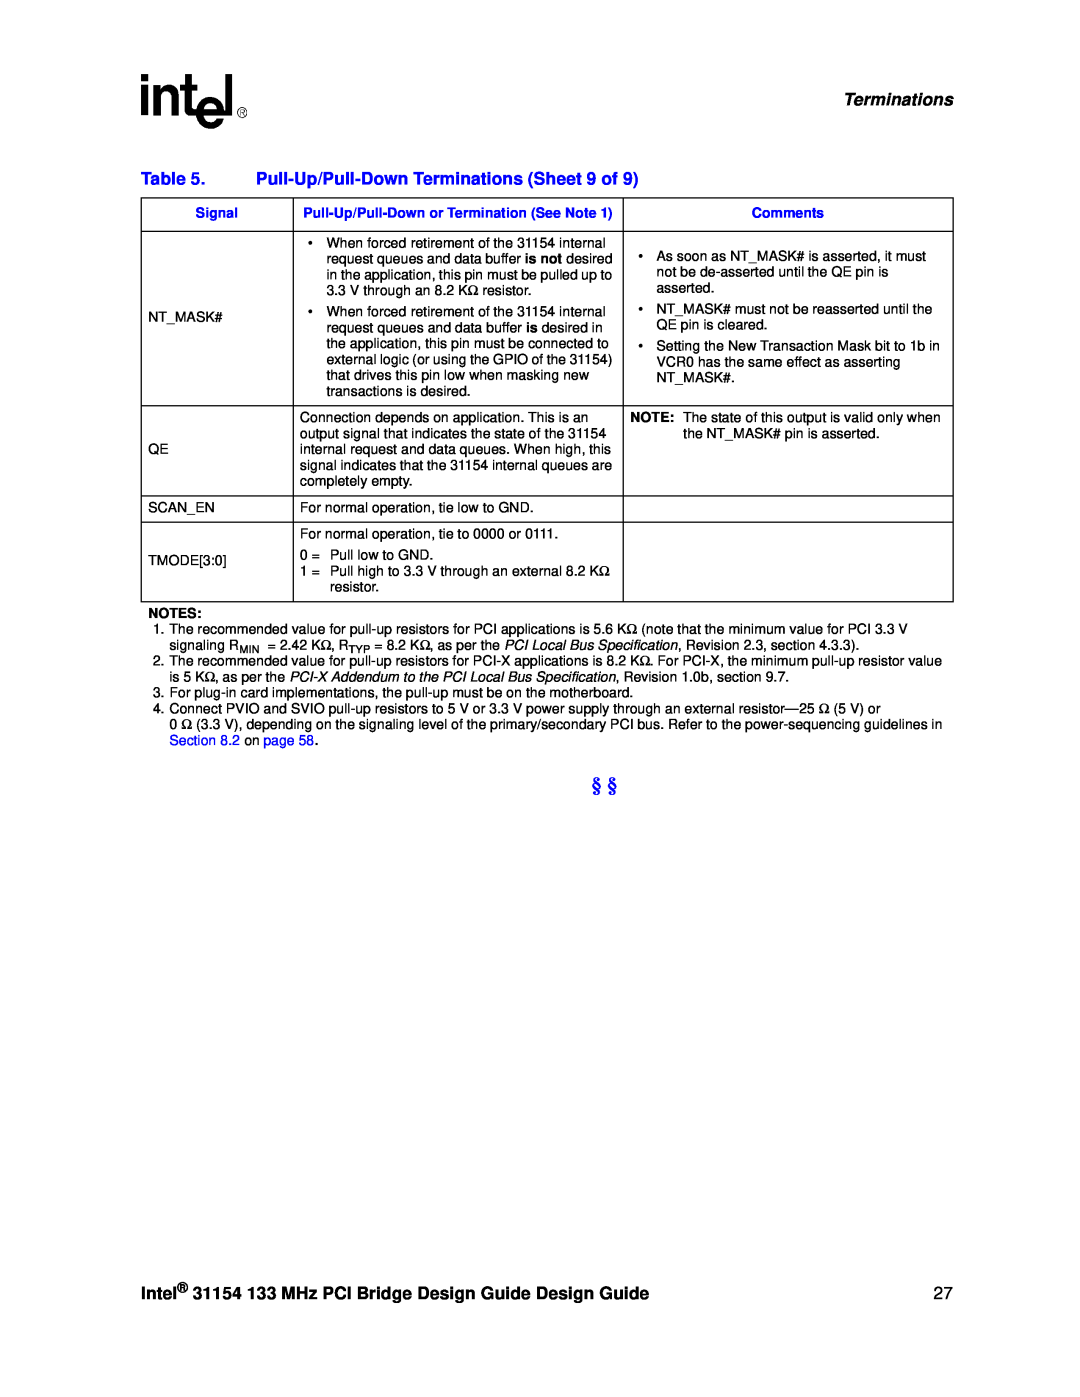 Intel manual Pull-Up/Pull-Down Terminations Sheet 9 of, Intel 31154 133 MHz PCI Bridge Design Guide Design Guide, Signal 